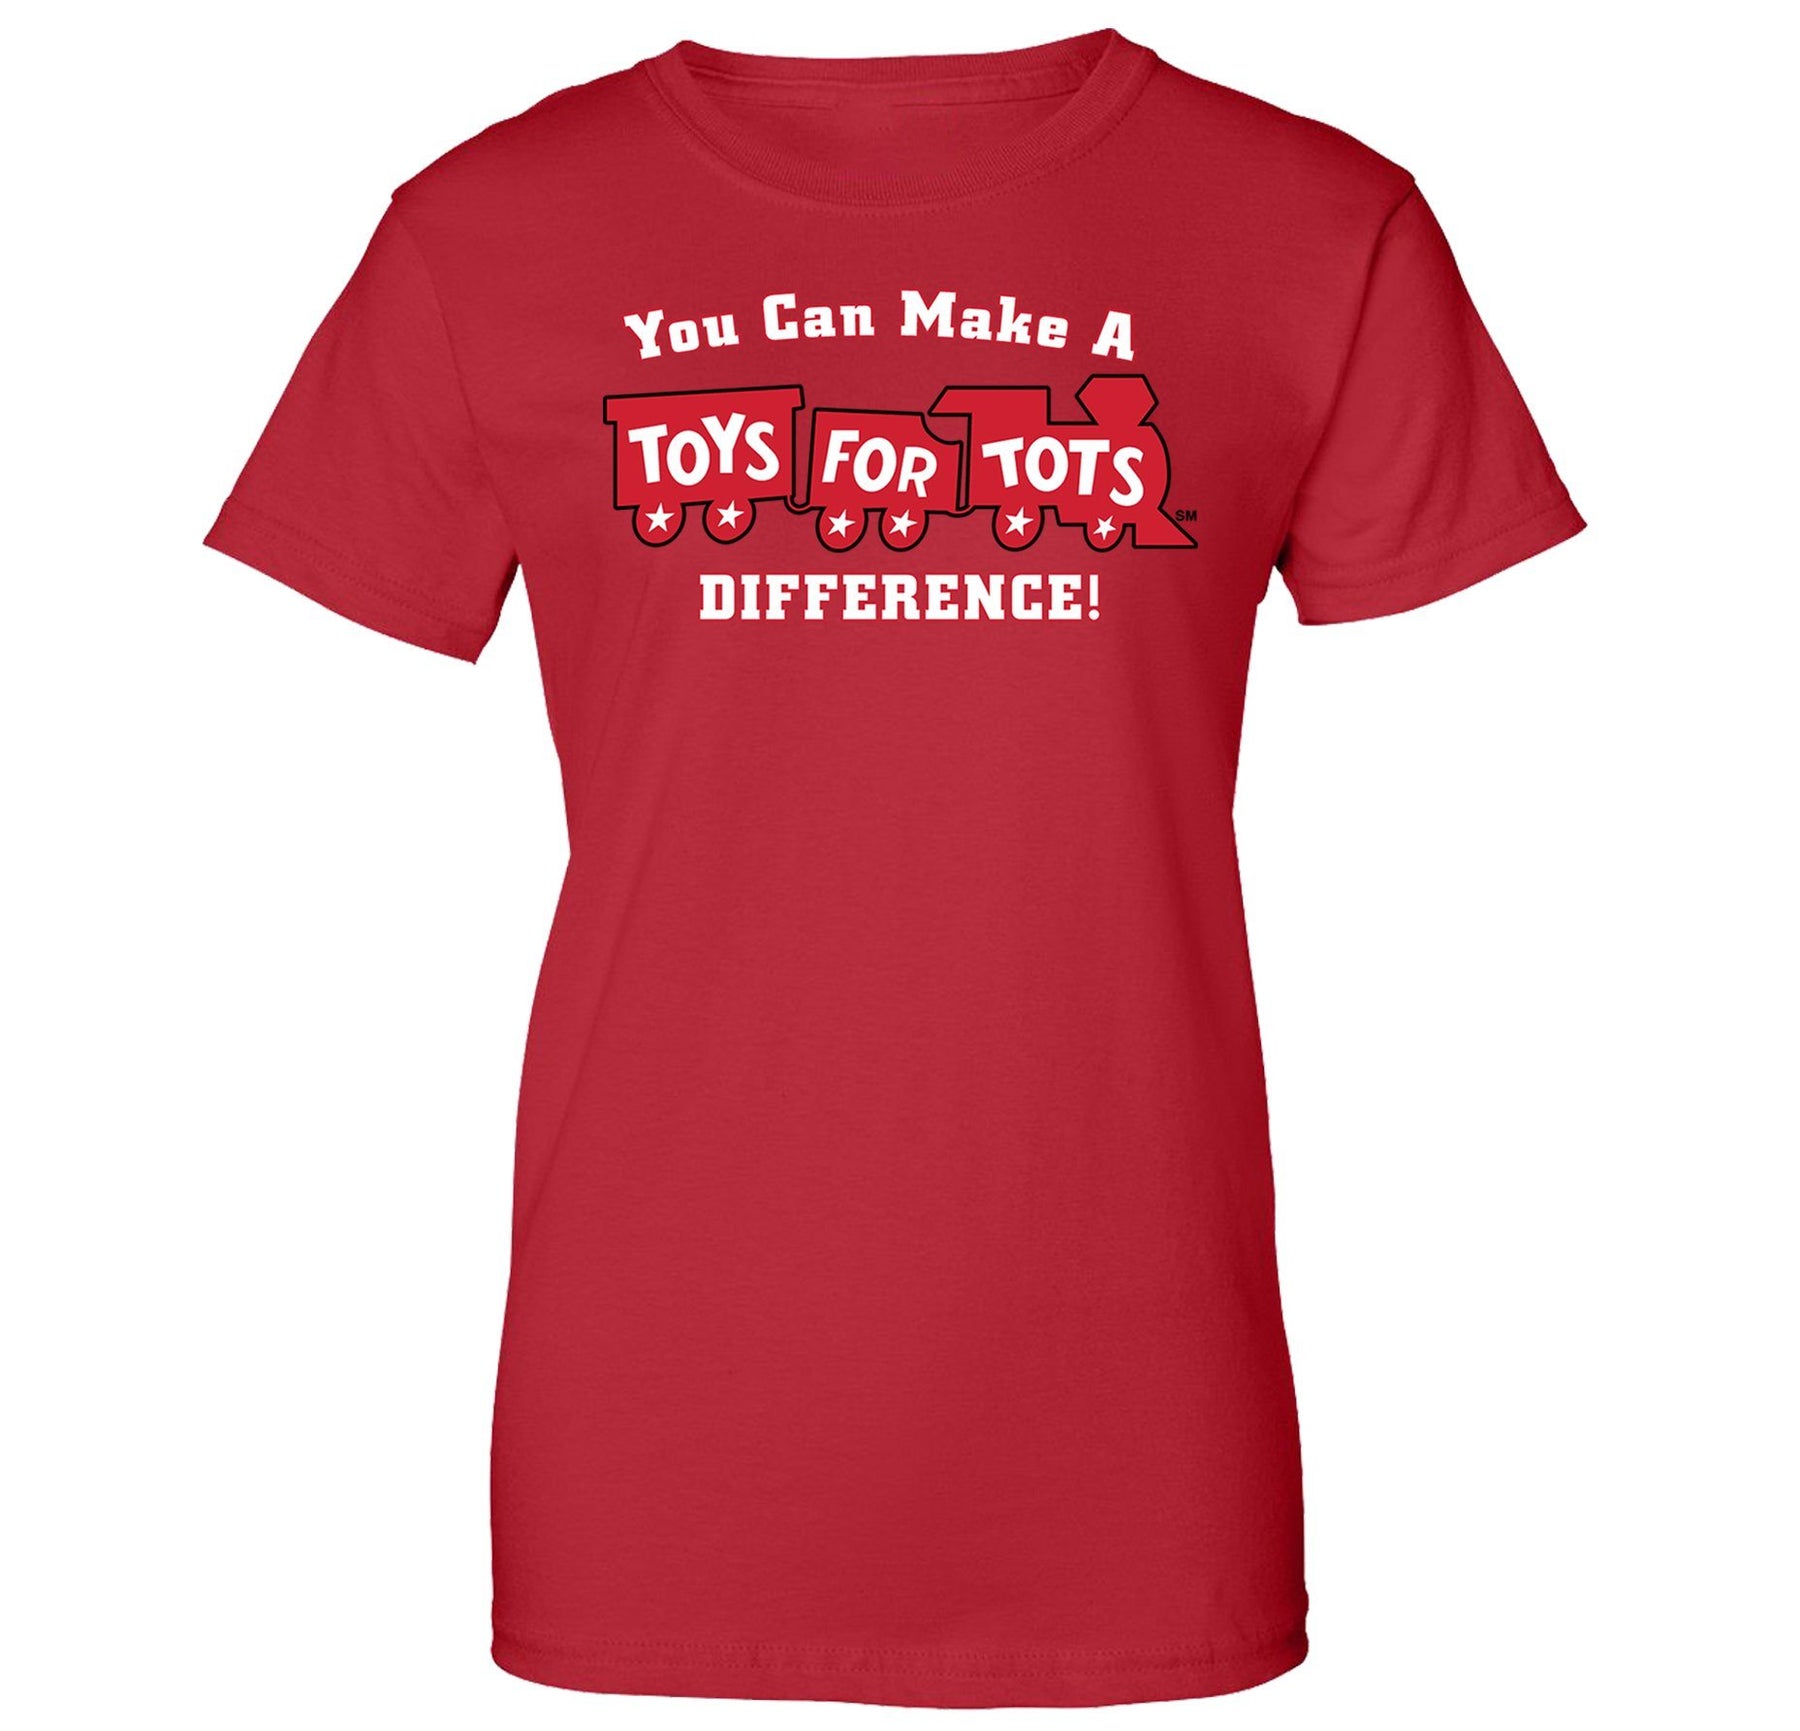 Make a Difference TFT Train Women's T-Shirt TFT Shirt marinecorpsdirecttft S RED 